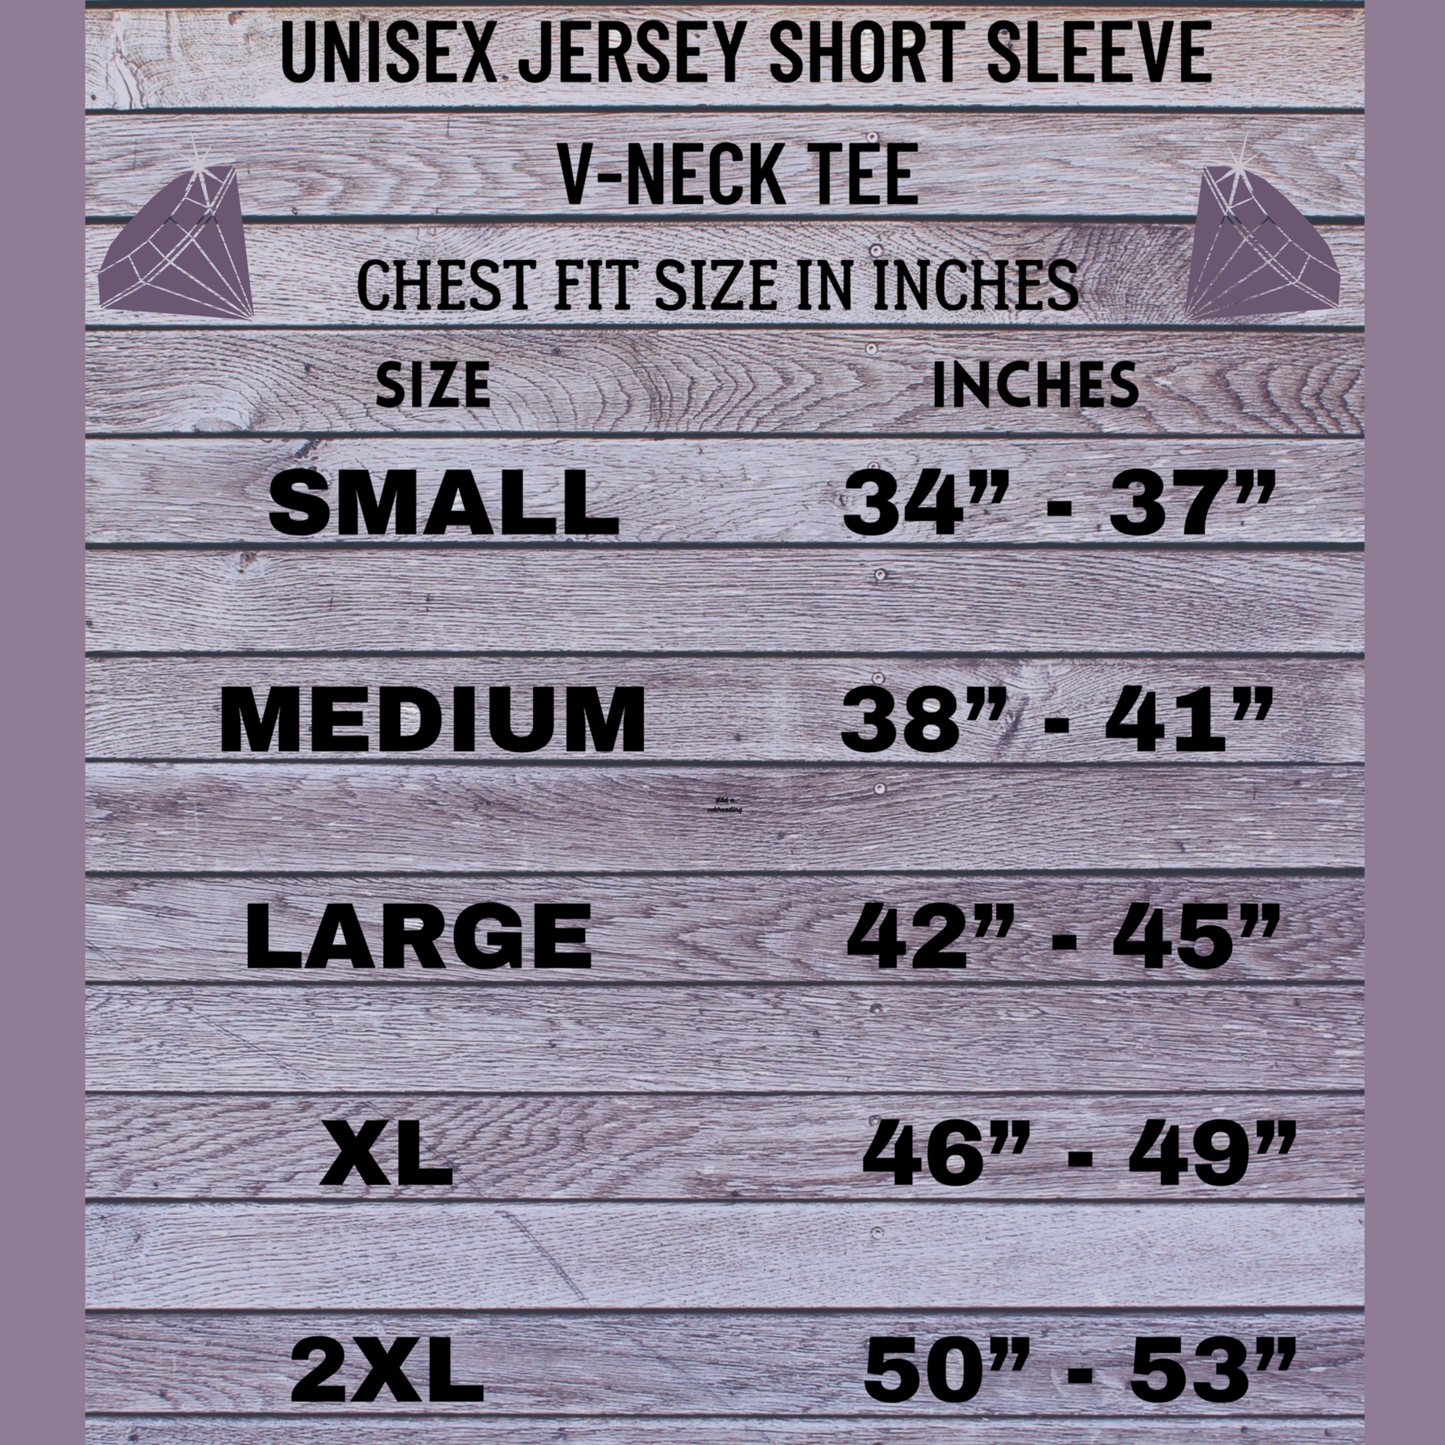 Negative Ghost Rider Unisex Jersey Short Sleeve V-Neck Tee